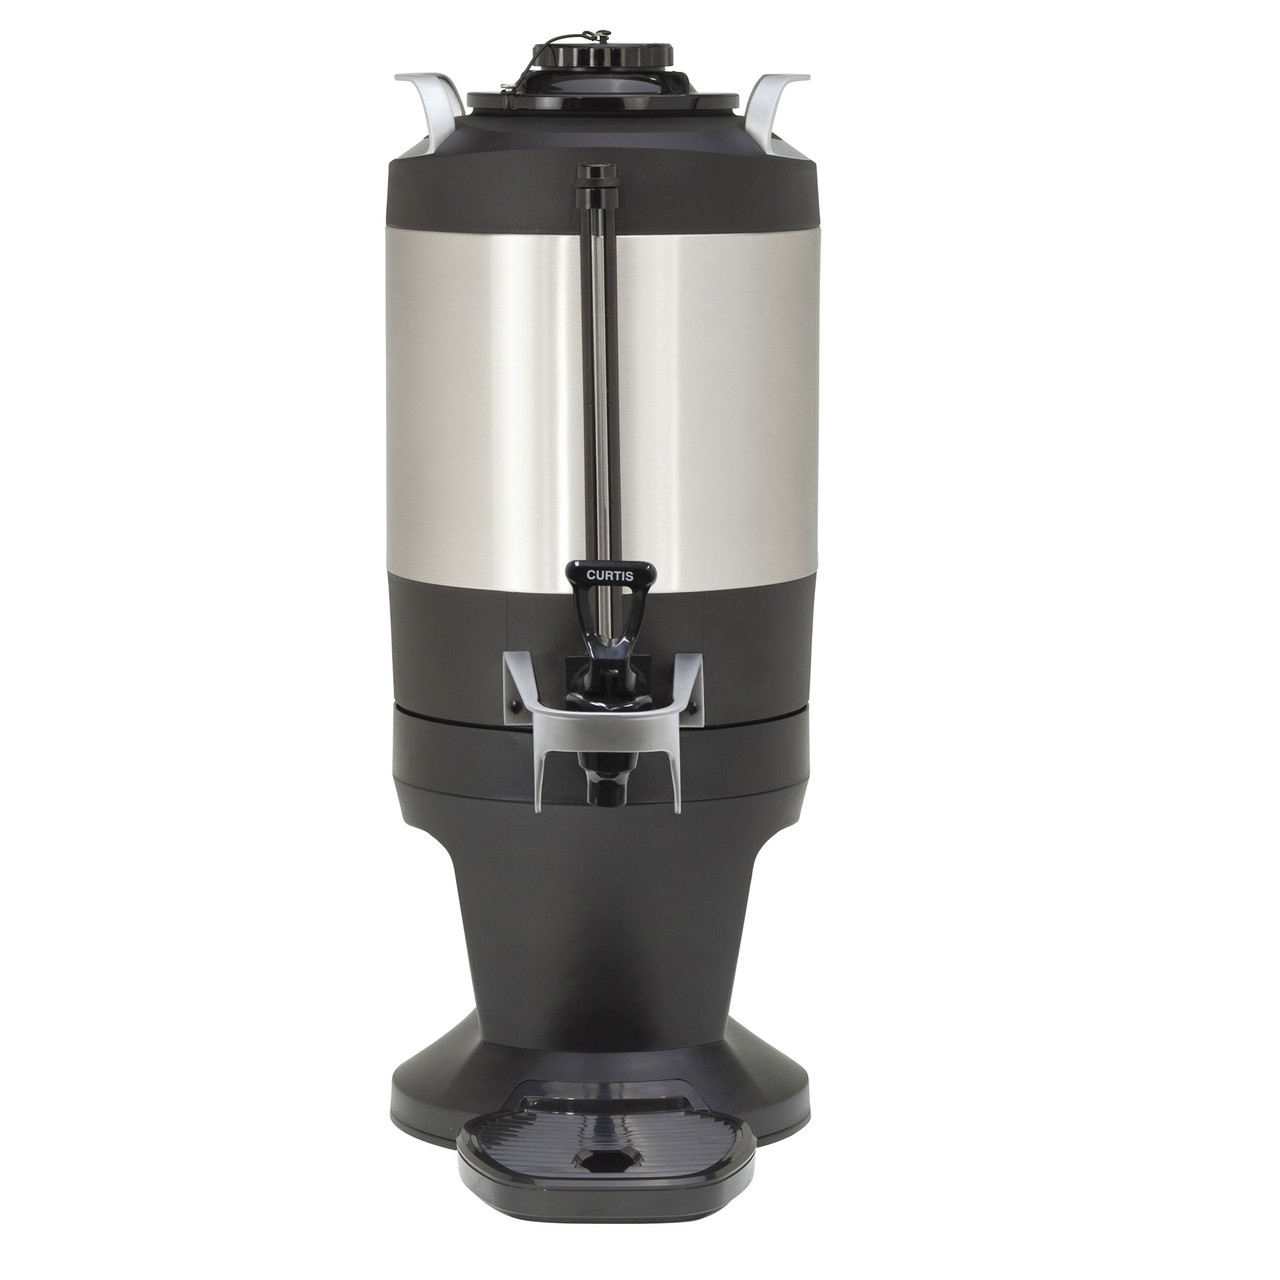 Fetco D012 TPD-30 Luxus 3.0 Gallon Thermal Dispenser